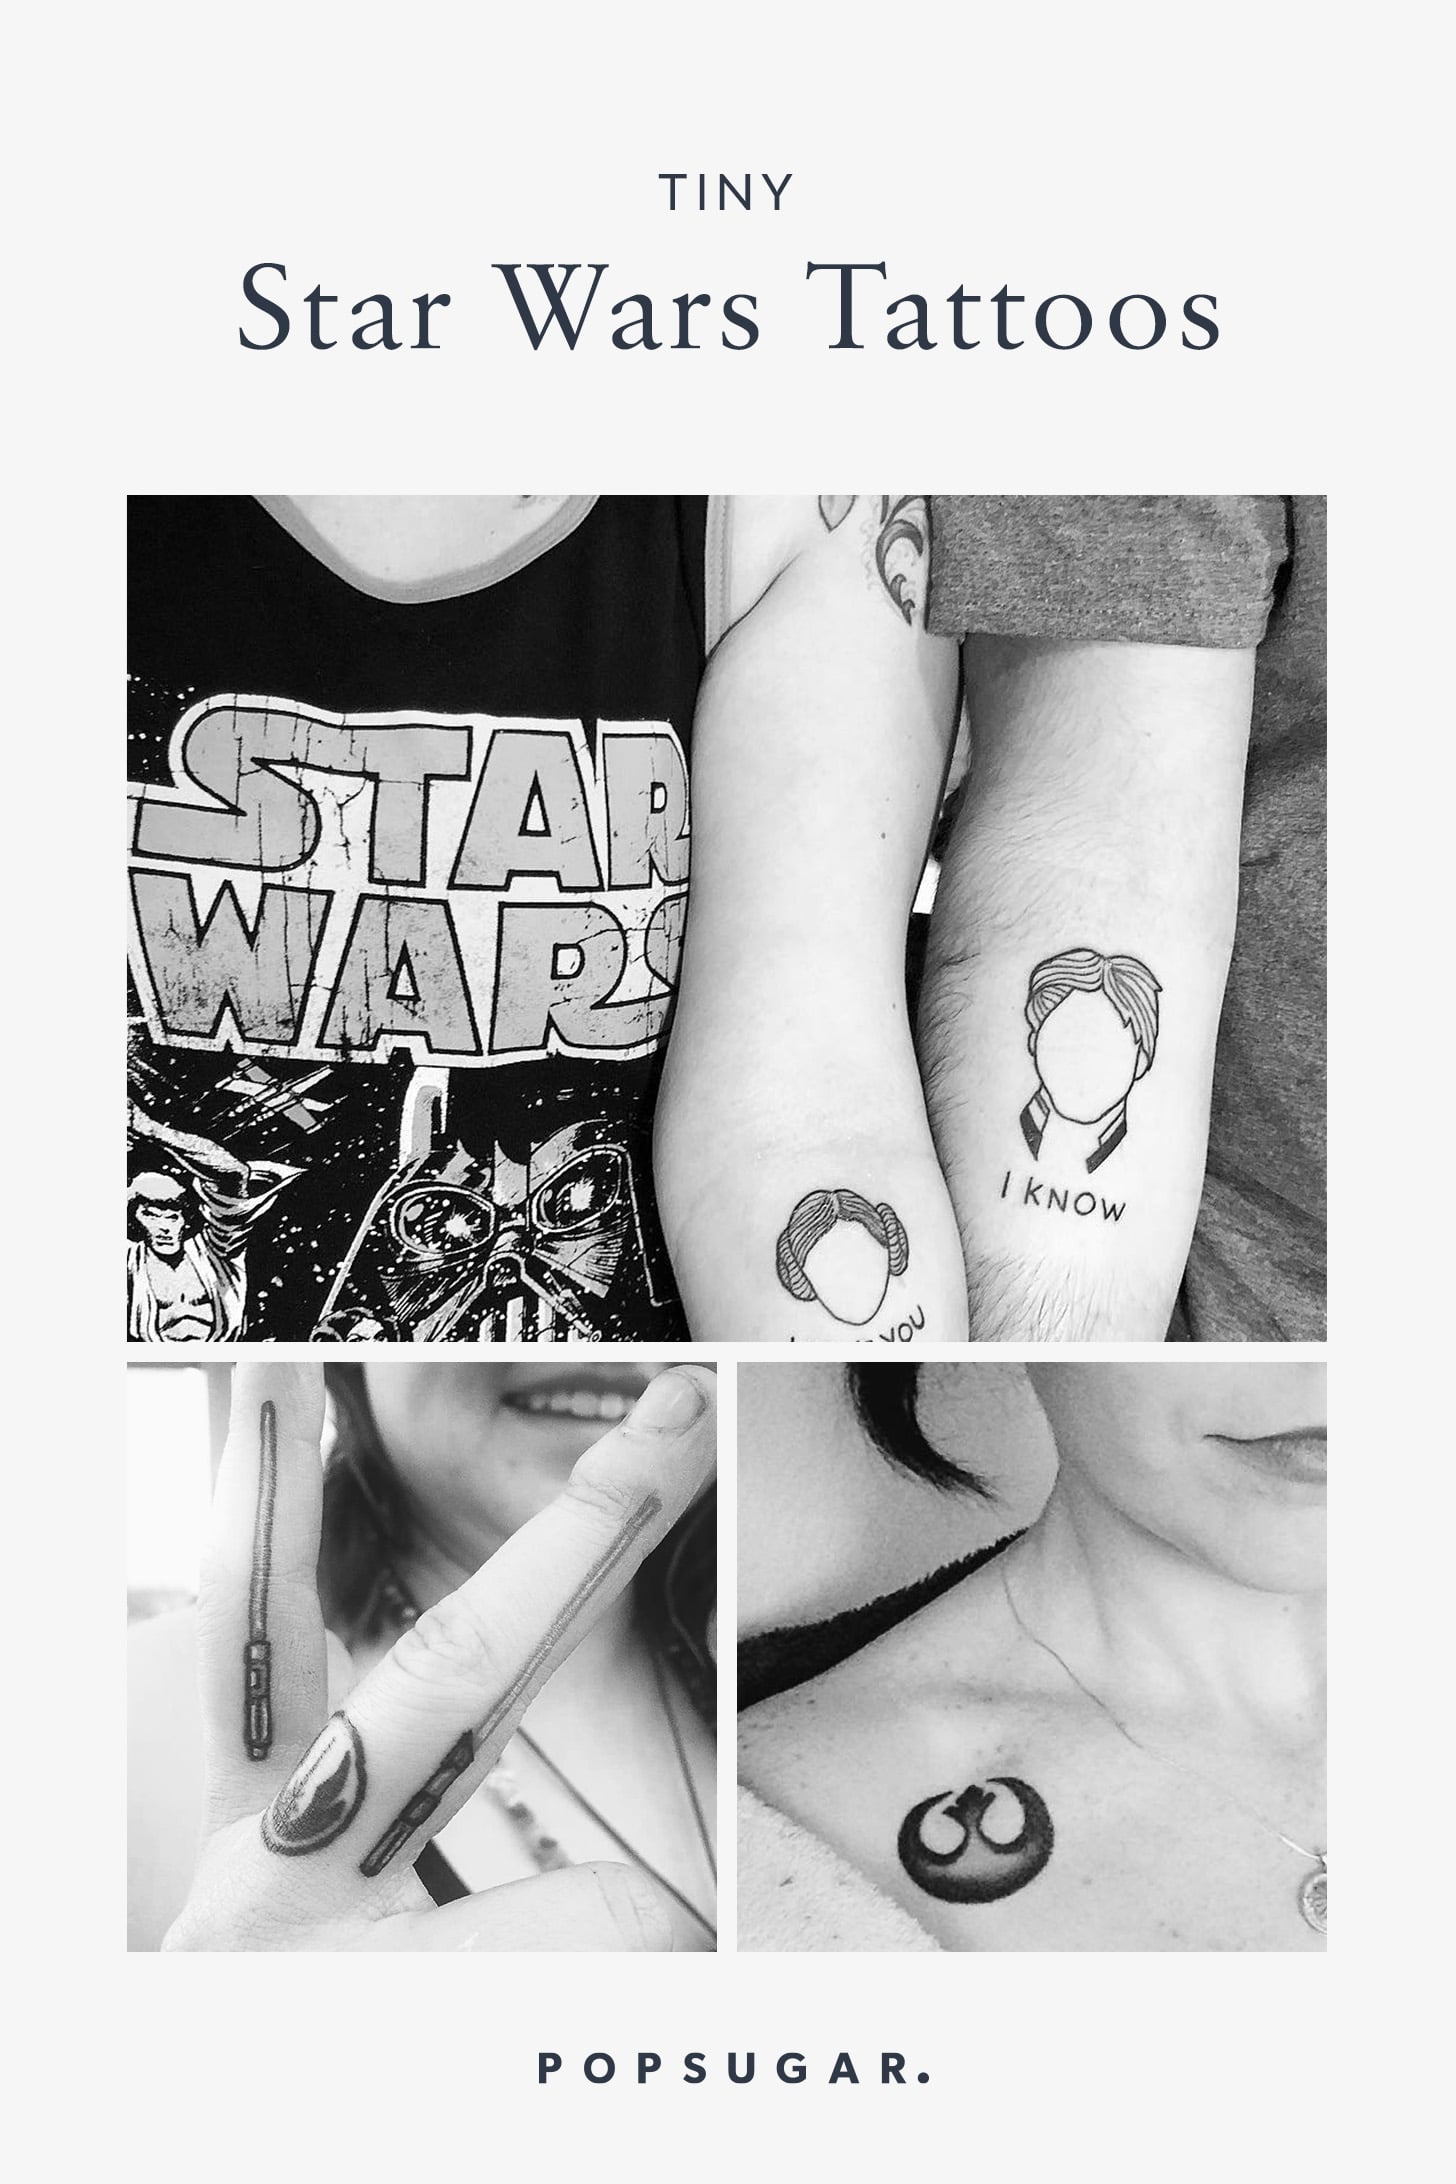 Minimalist Princess Leia tattoo on the forearm